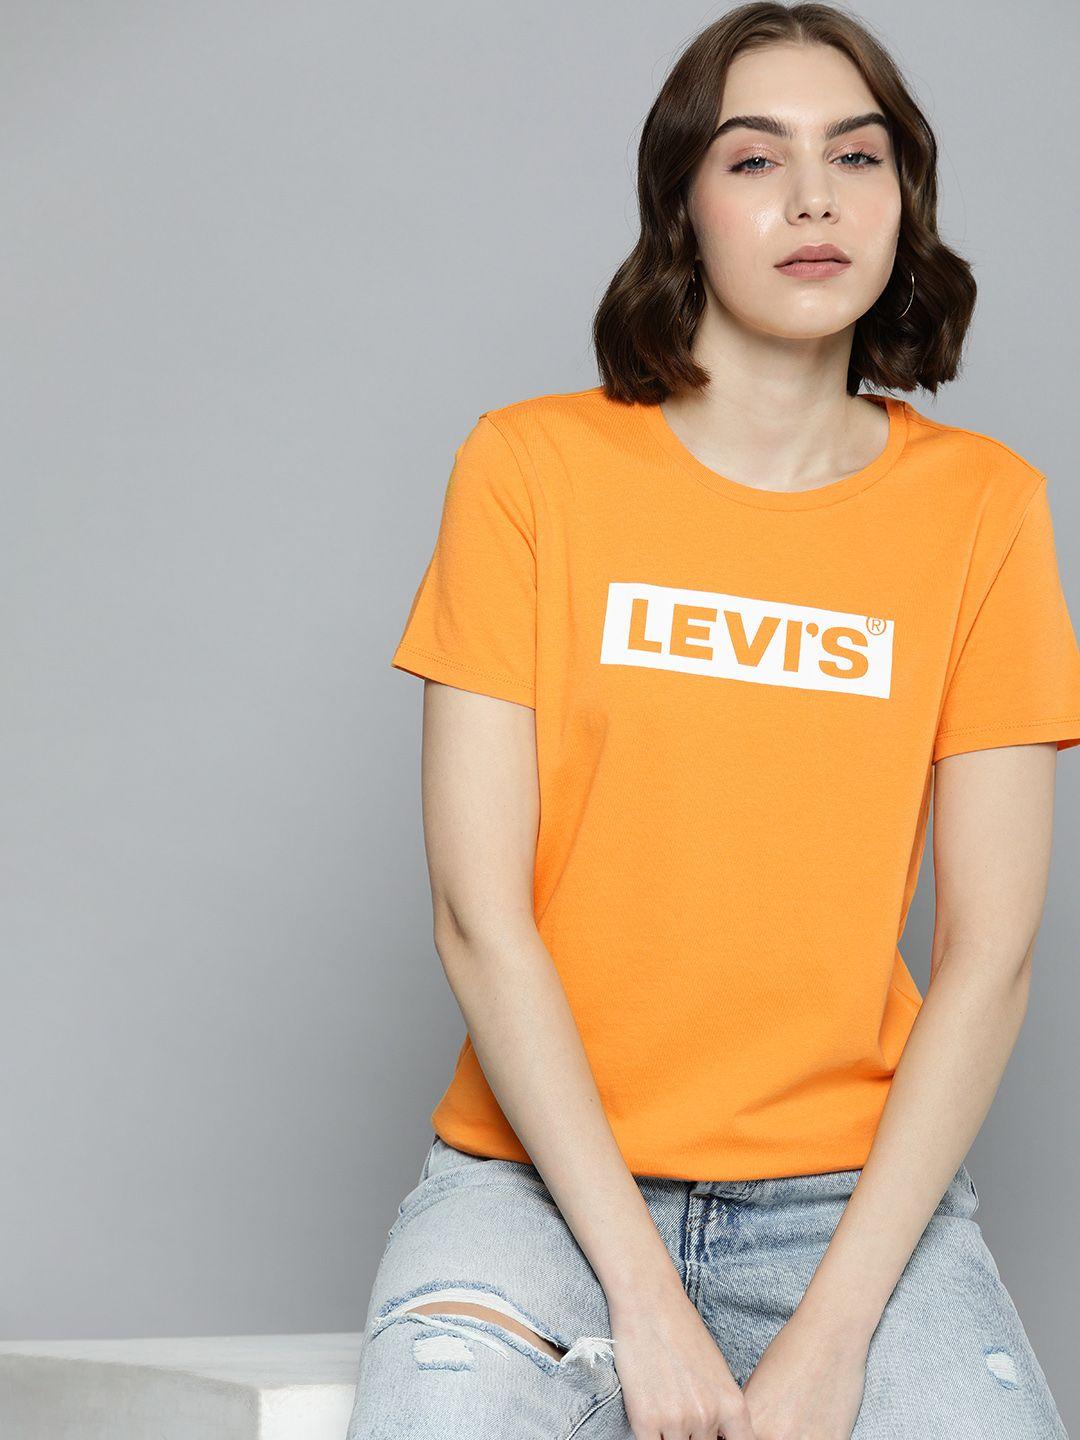 levis brand logo printed pure cotton t-shirt